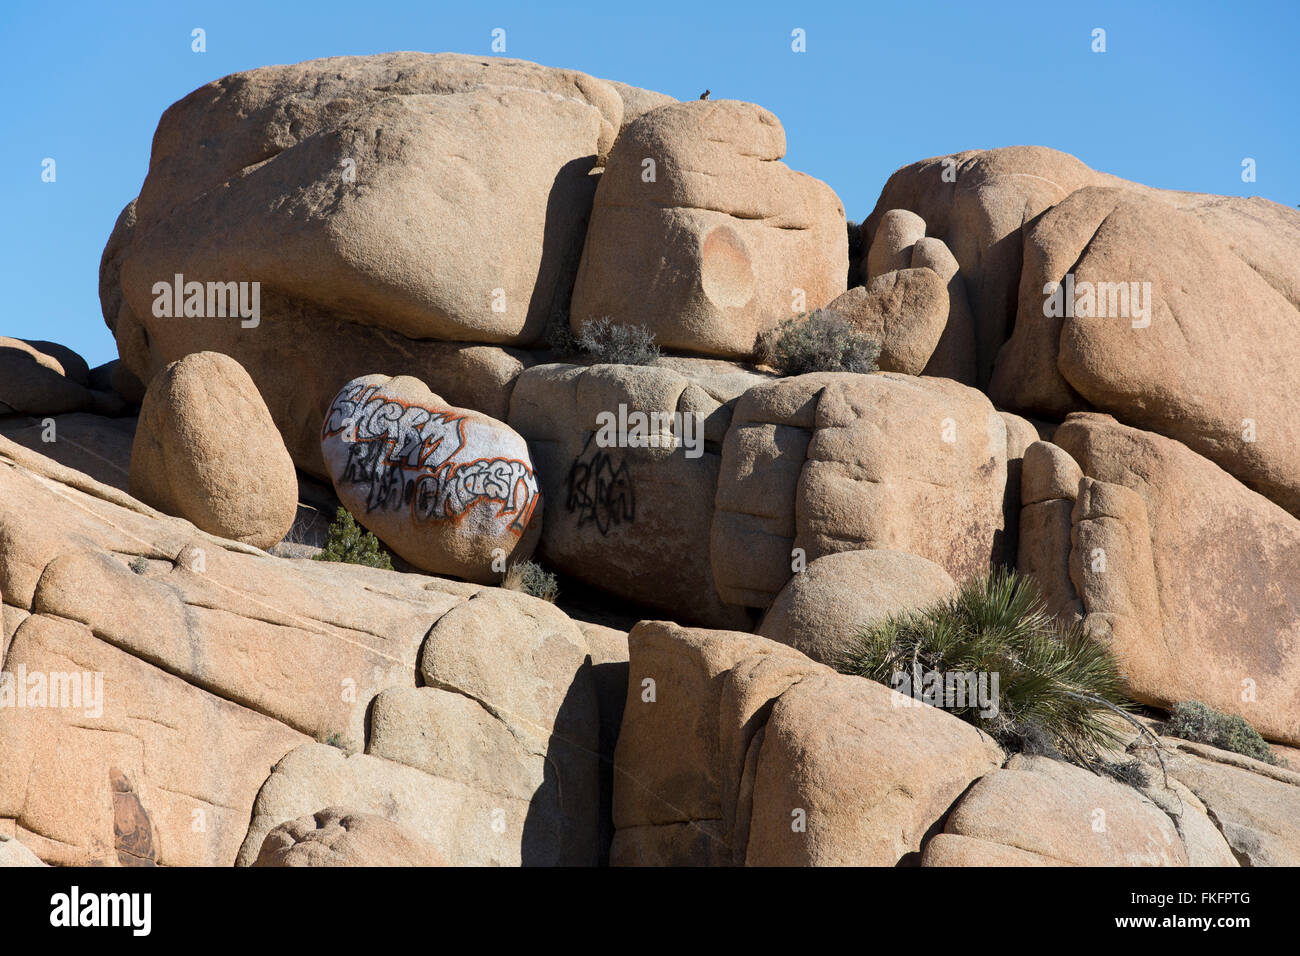 Graffiti on rock, Jumbo Rocks, Joshua Tree National Park, California, USA Stock Photo